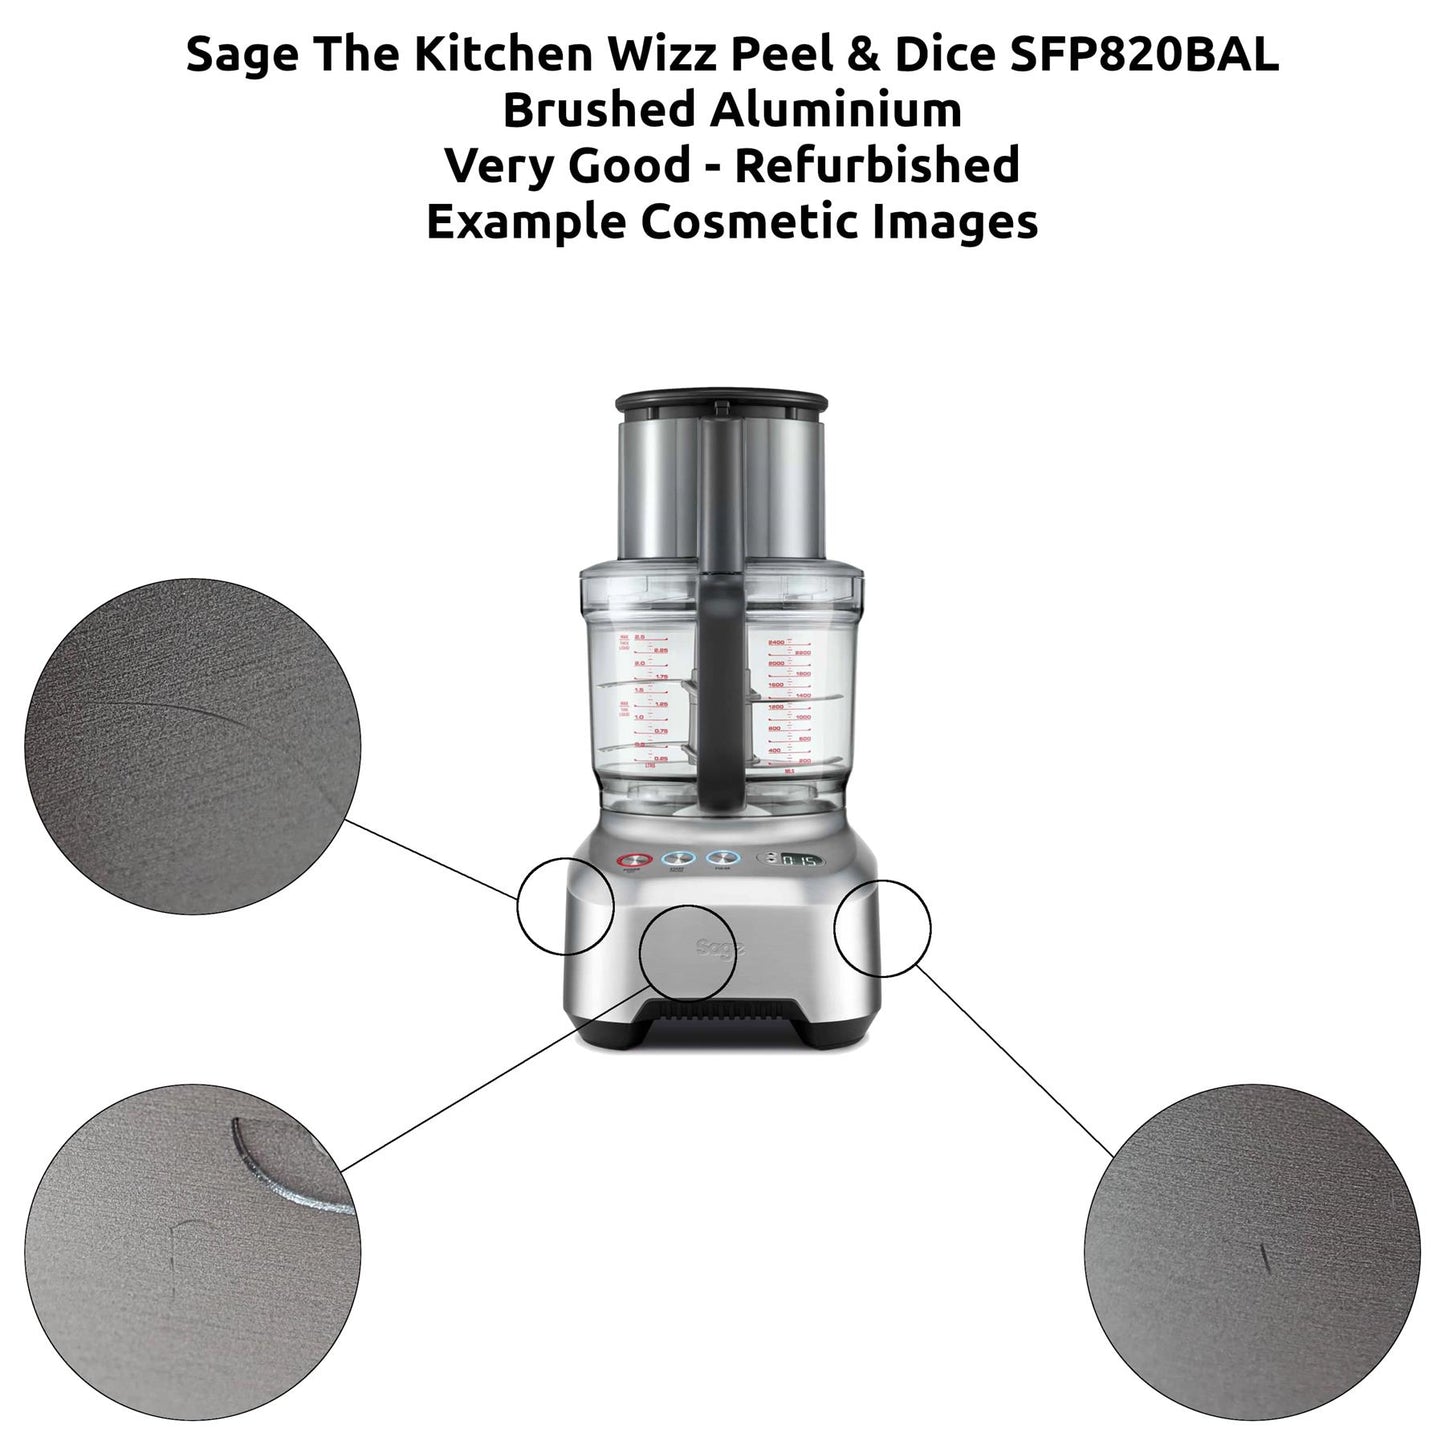 Sage The Kitchen Wizz Peel & Dice SFP820 Food Processor